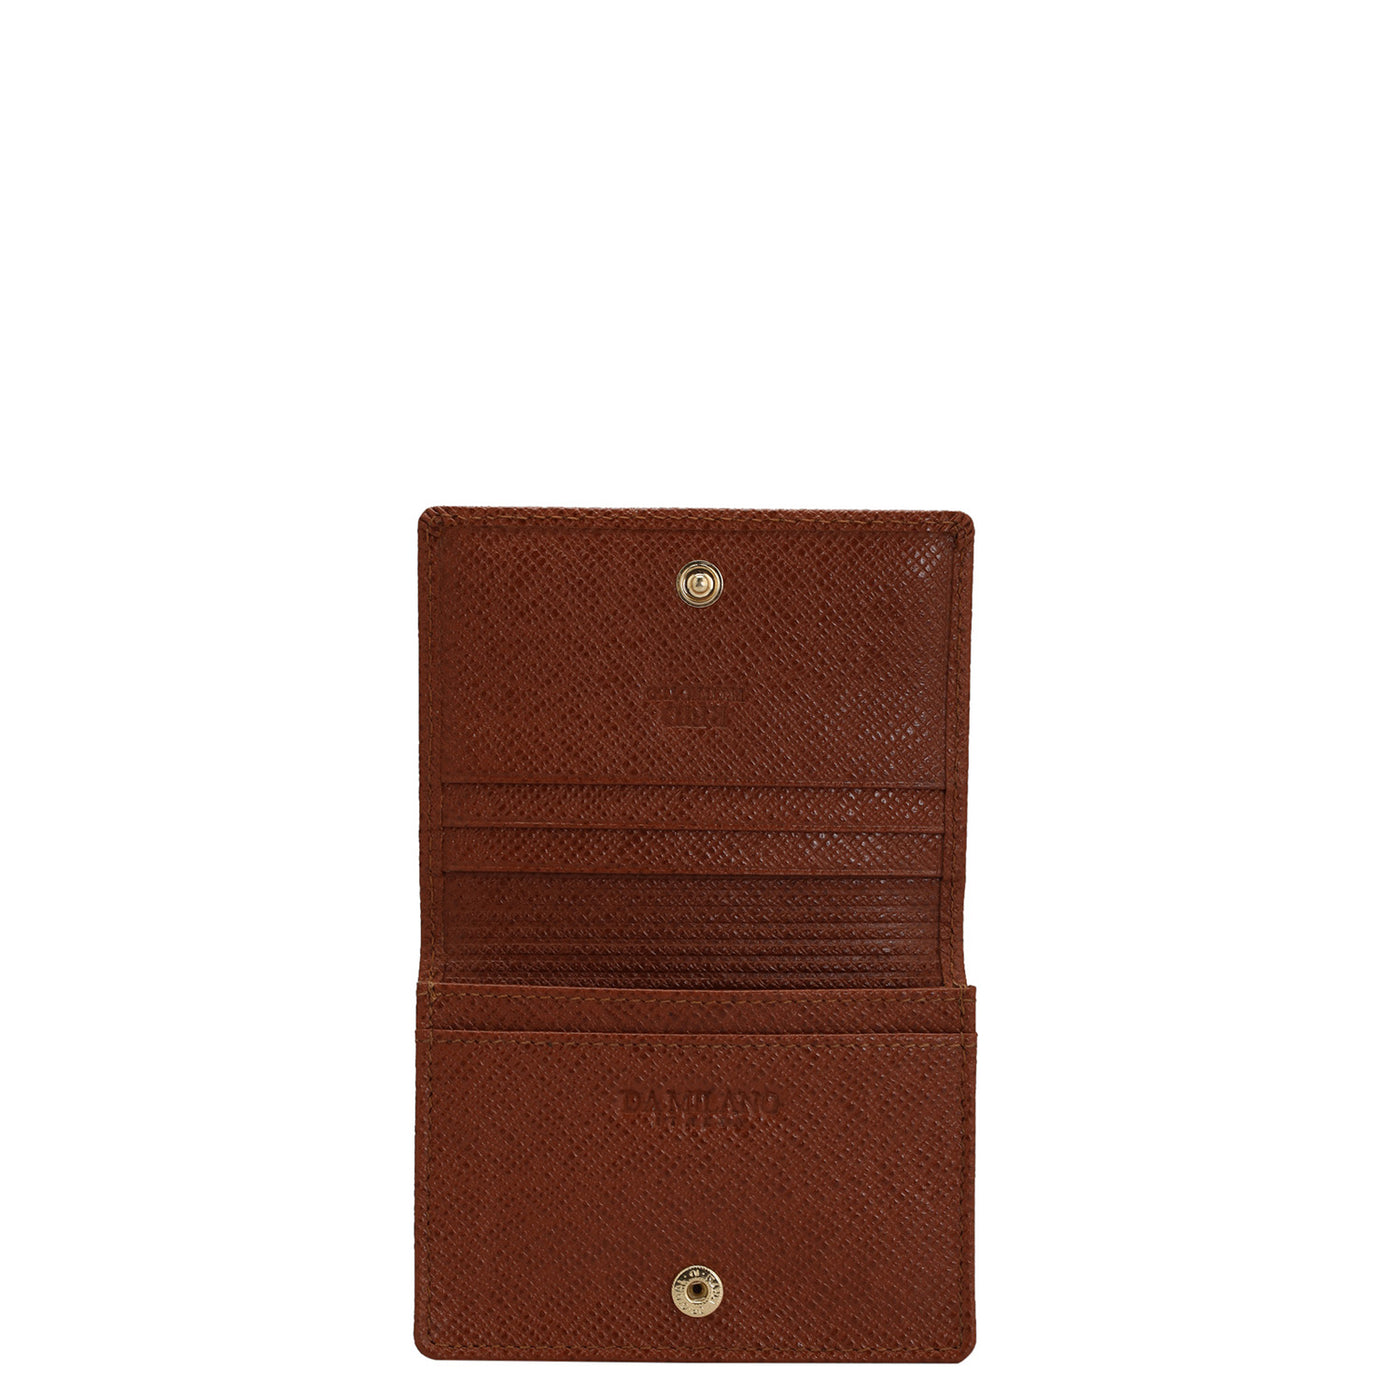 Franzy Leather Card Case - Tan